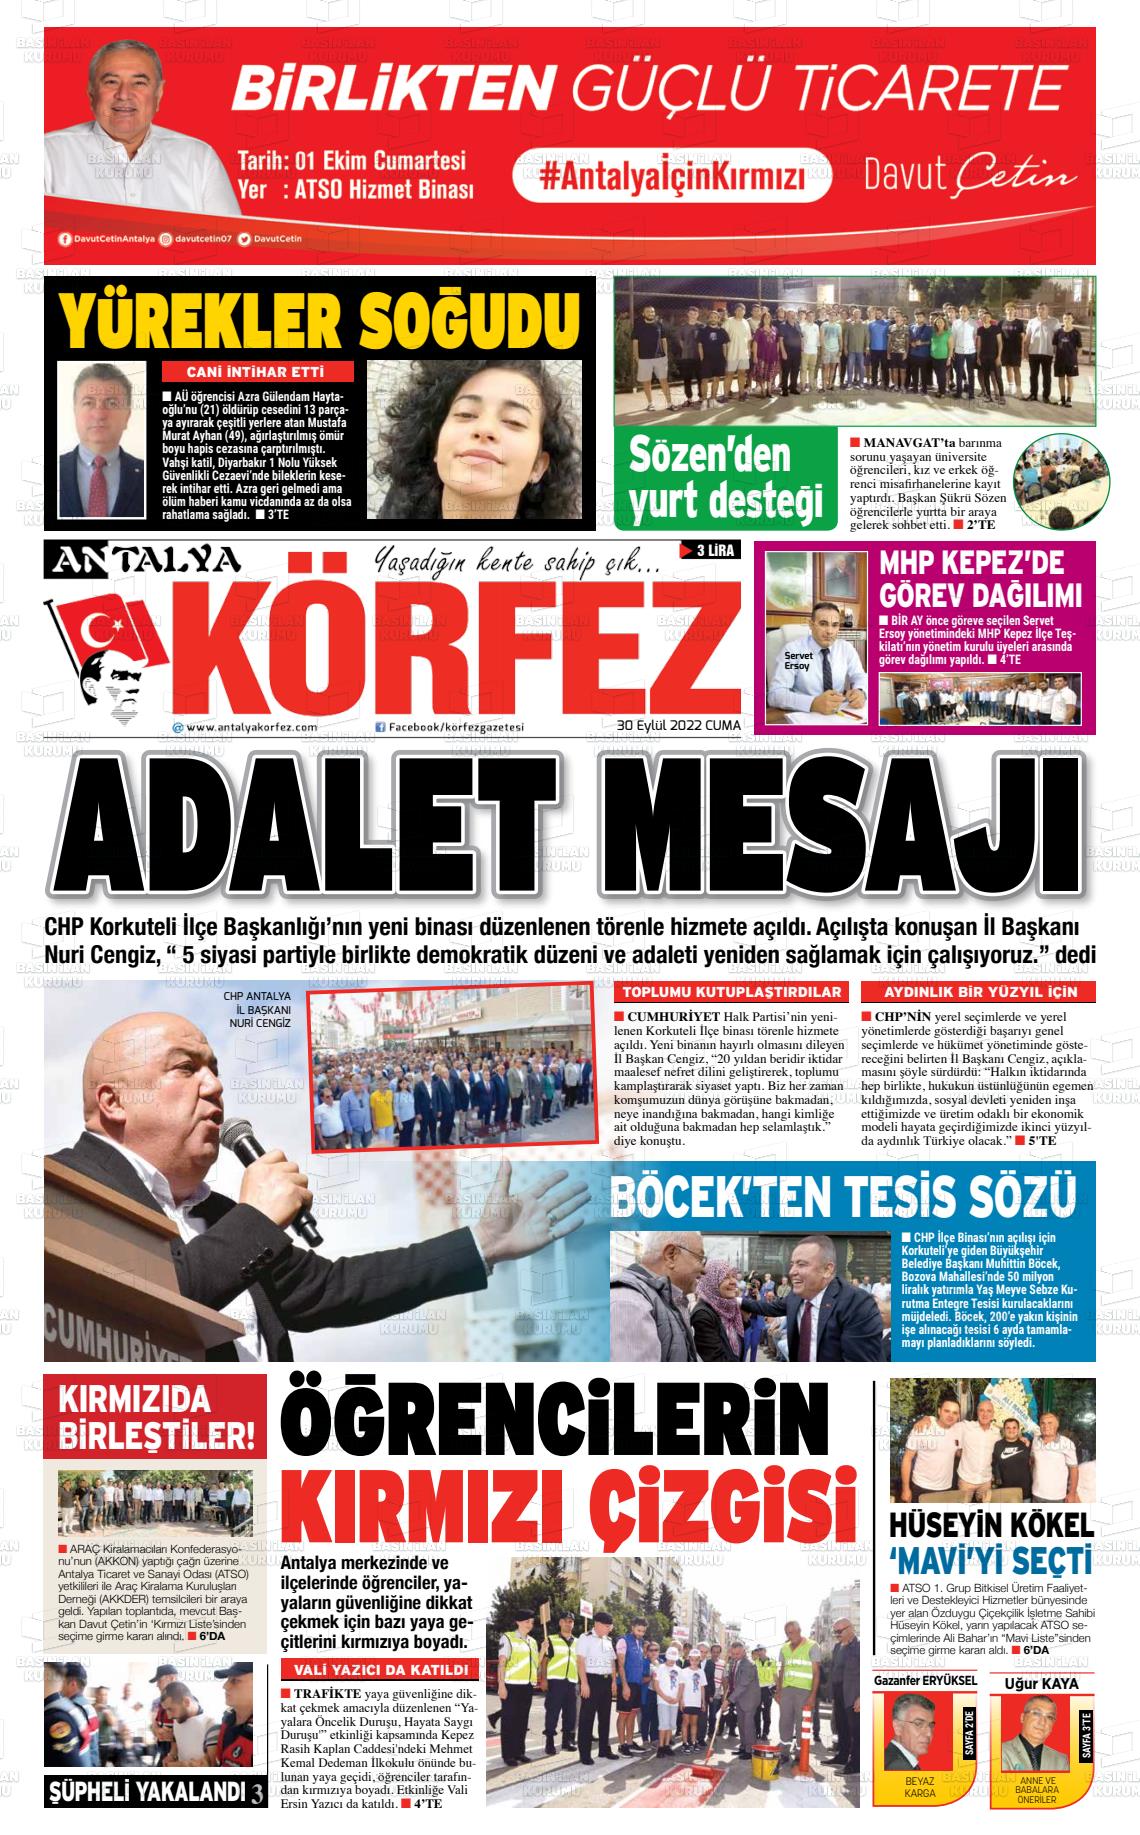 30 Eylül 2022 Antalya Körfez Gazete Manşeti